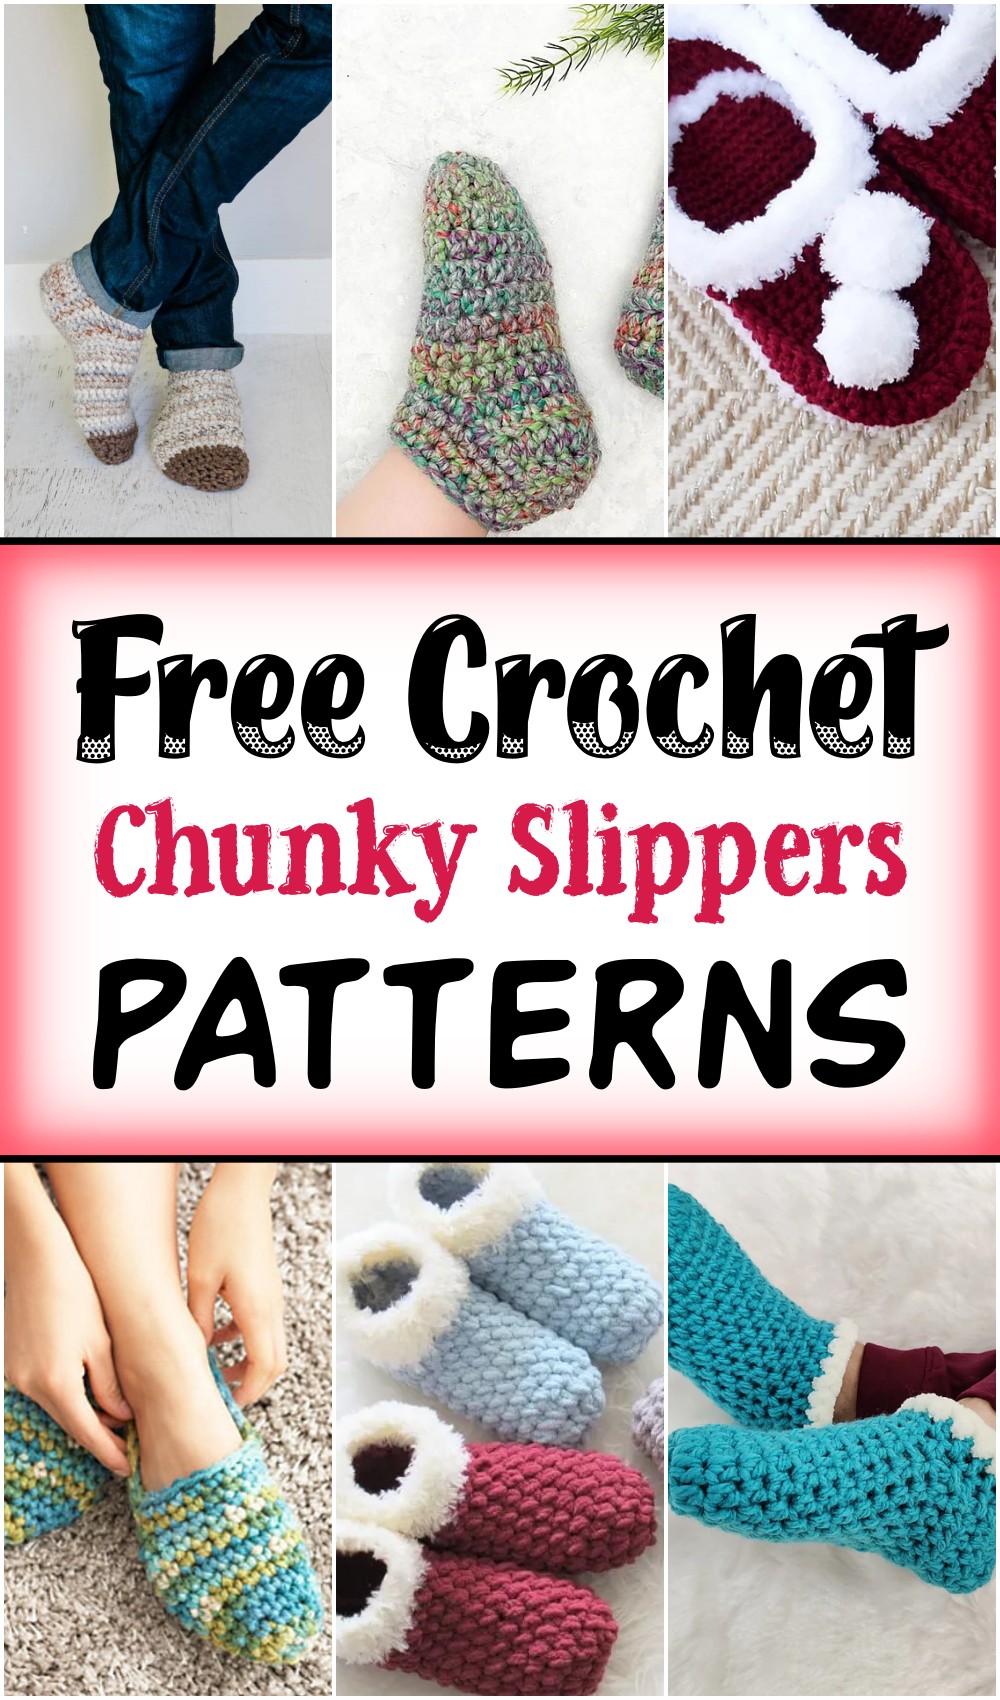 Crochet Chunky Slippers Patterns